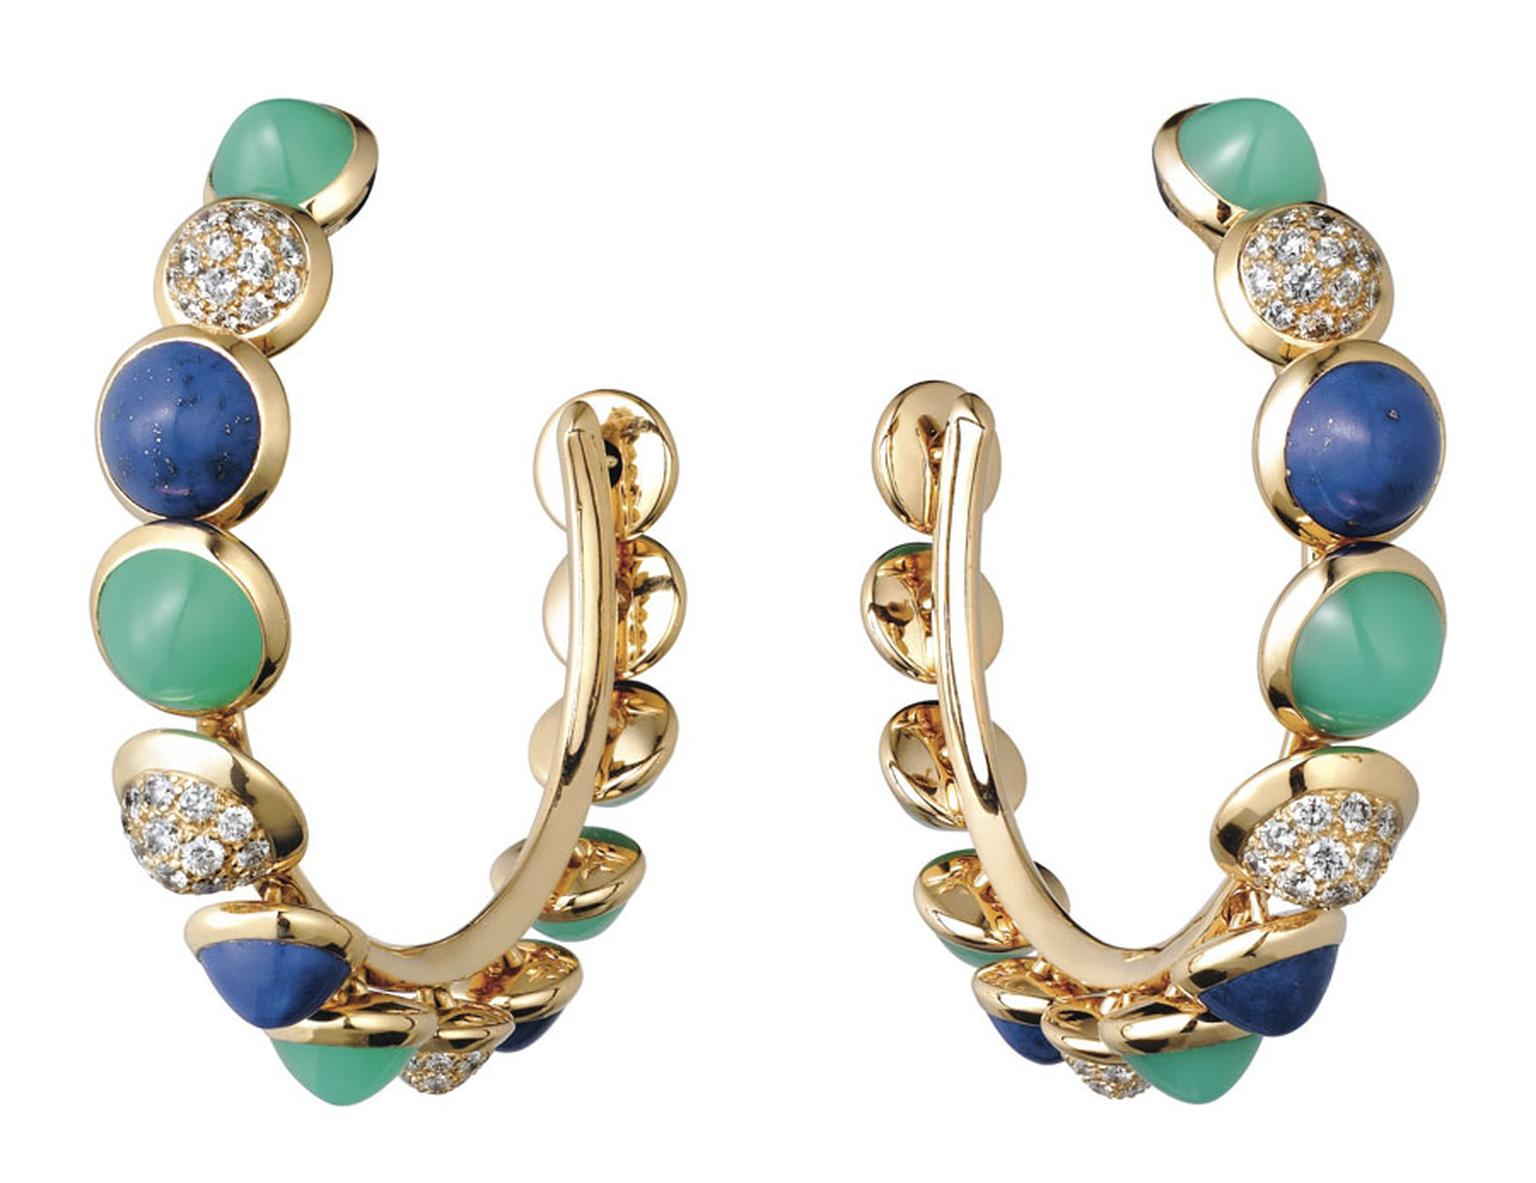 Cartier Paris Nouvelle Vague 'Mischievous' earrings in yellow gold, set with lapis lazuli, chrysoprase and diamonds.